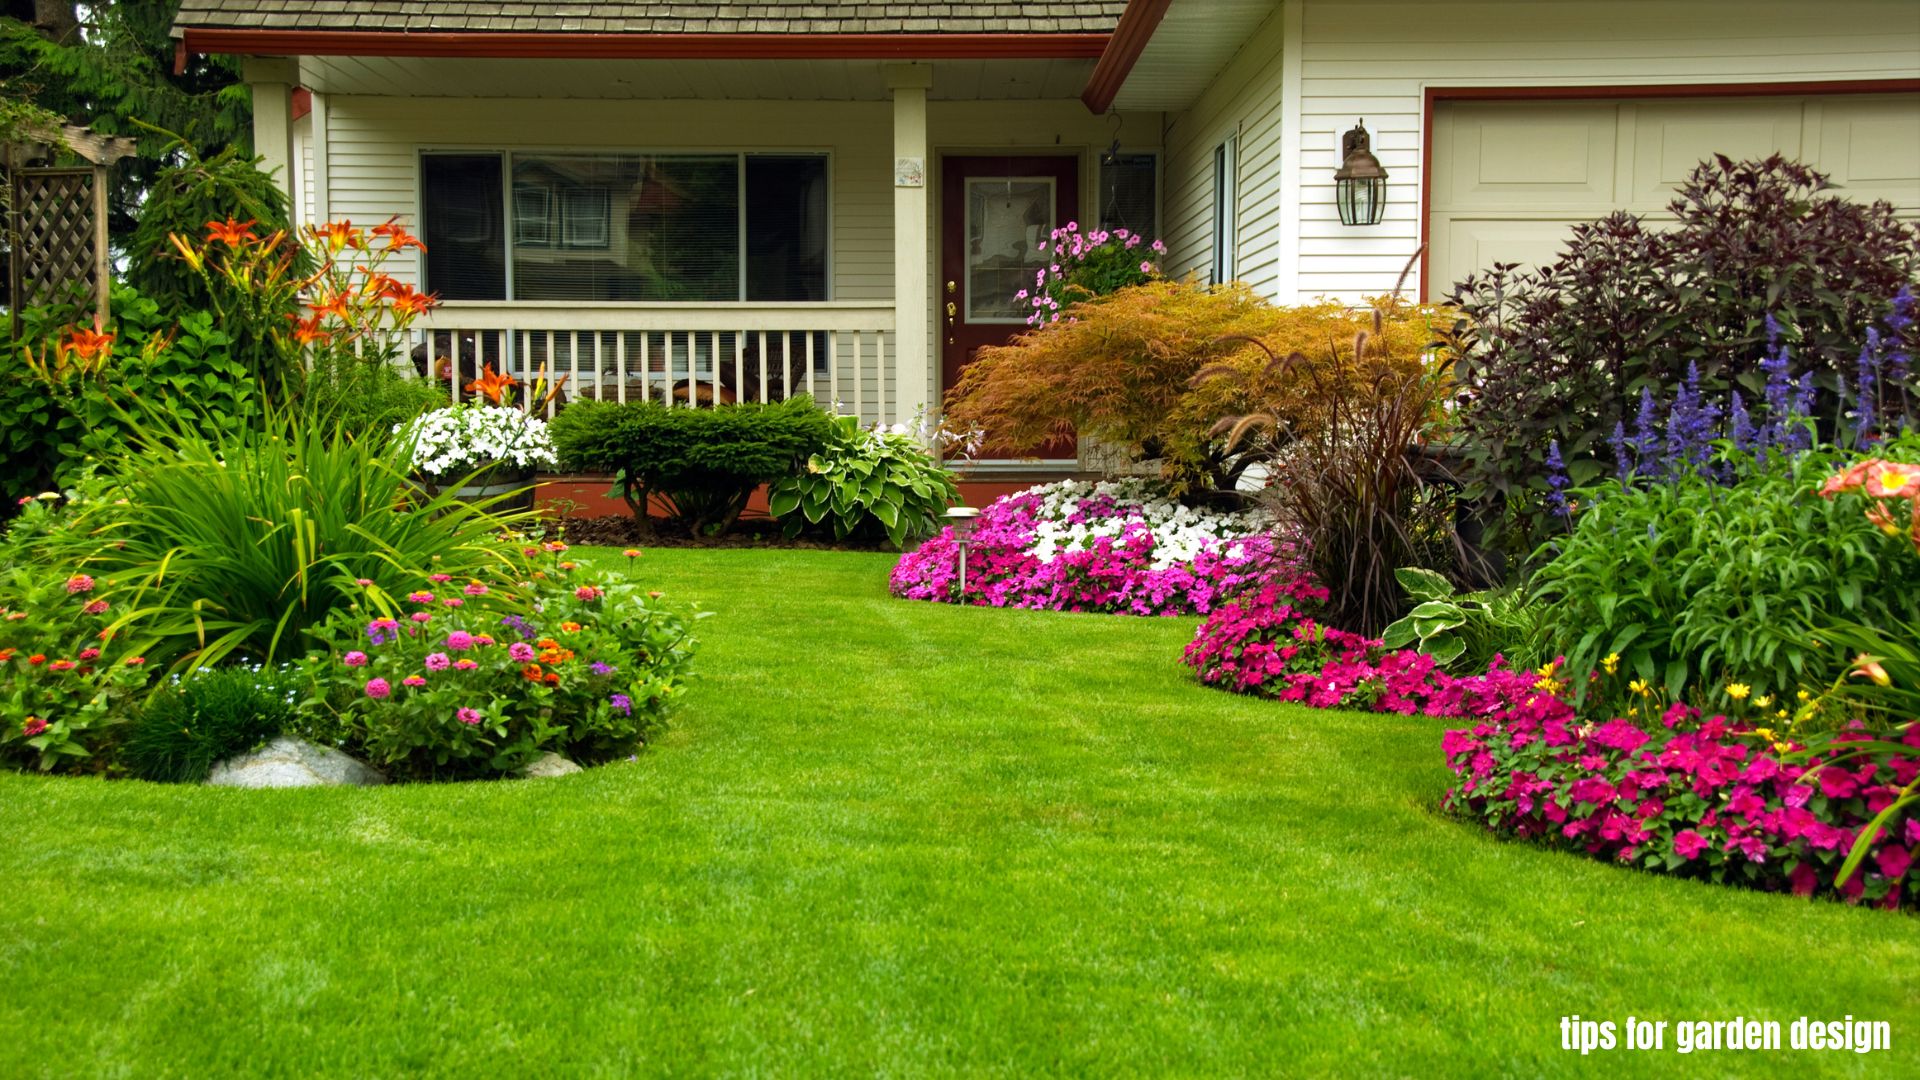 Optimized garden design and outdoor space